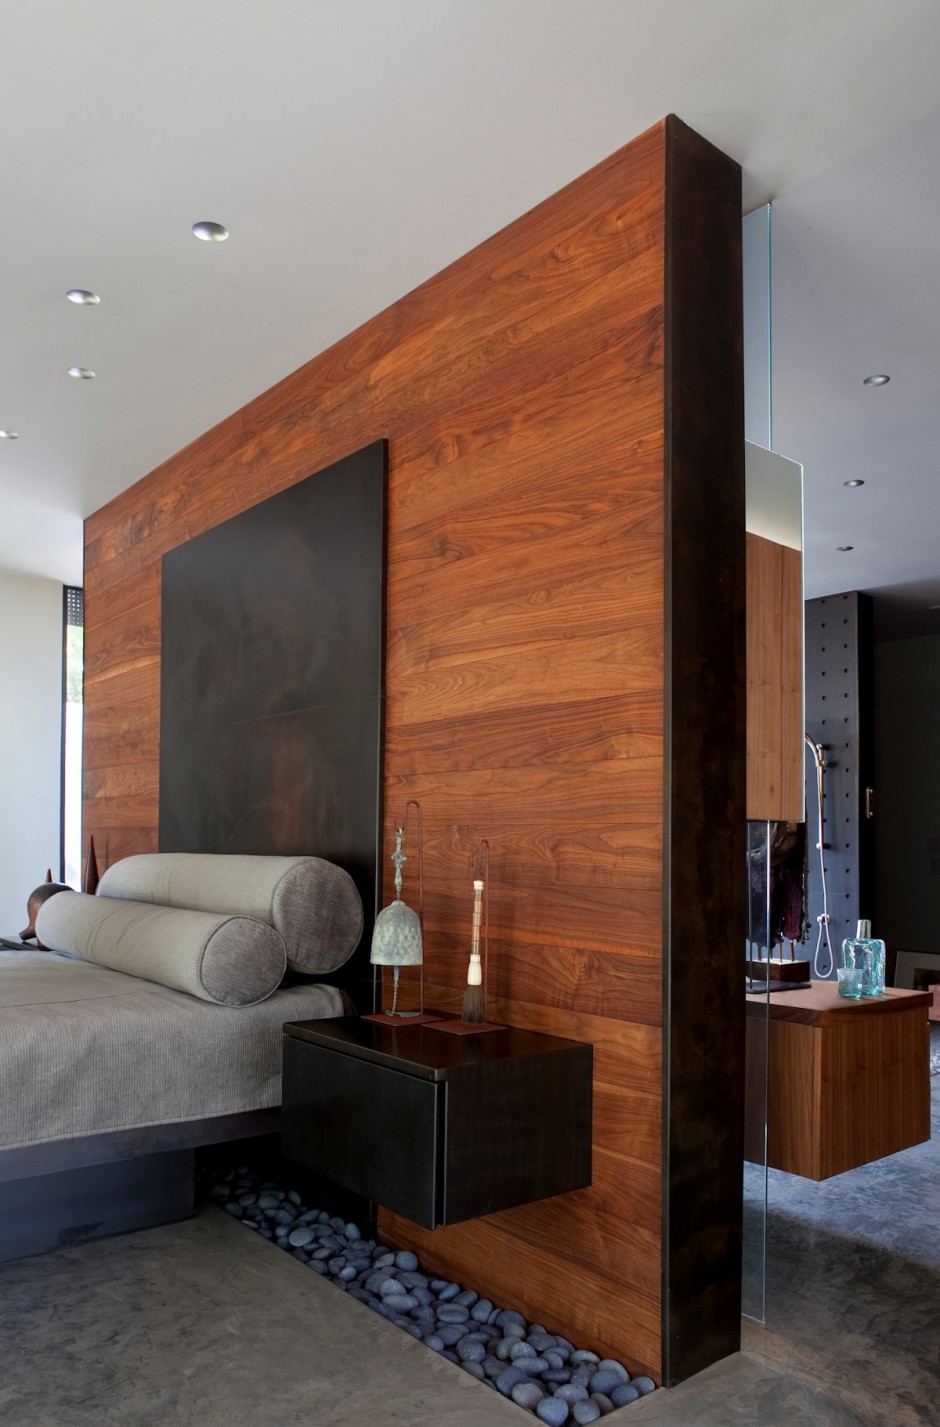 52 Master Bedroom Ideas That Go Beyond The Basics ...